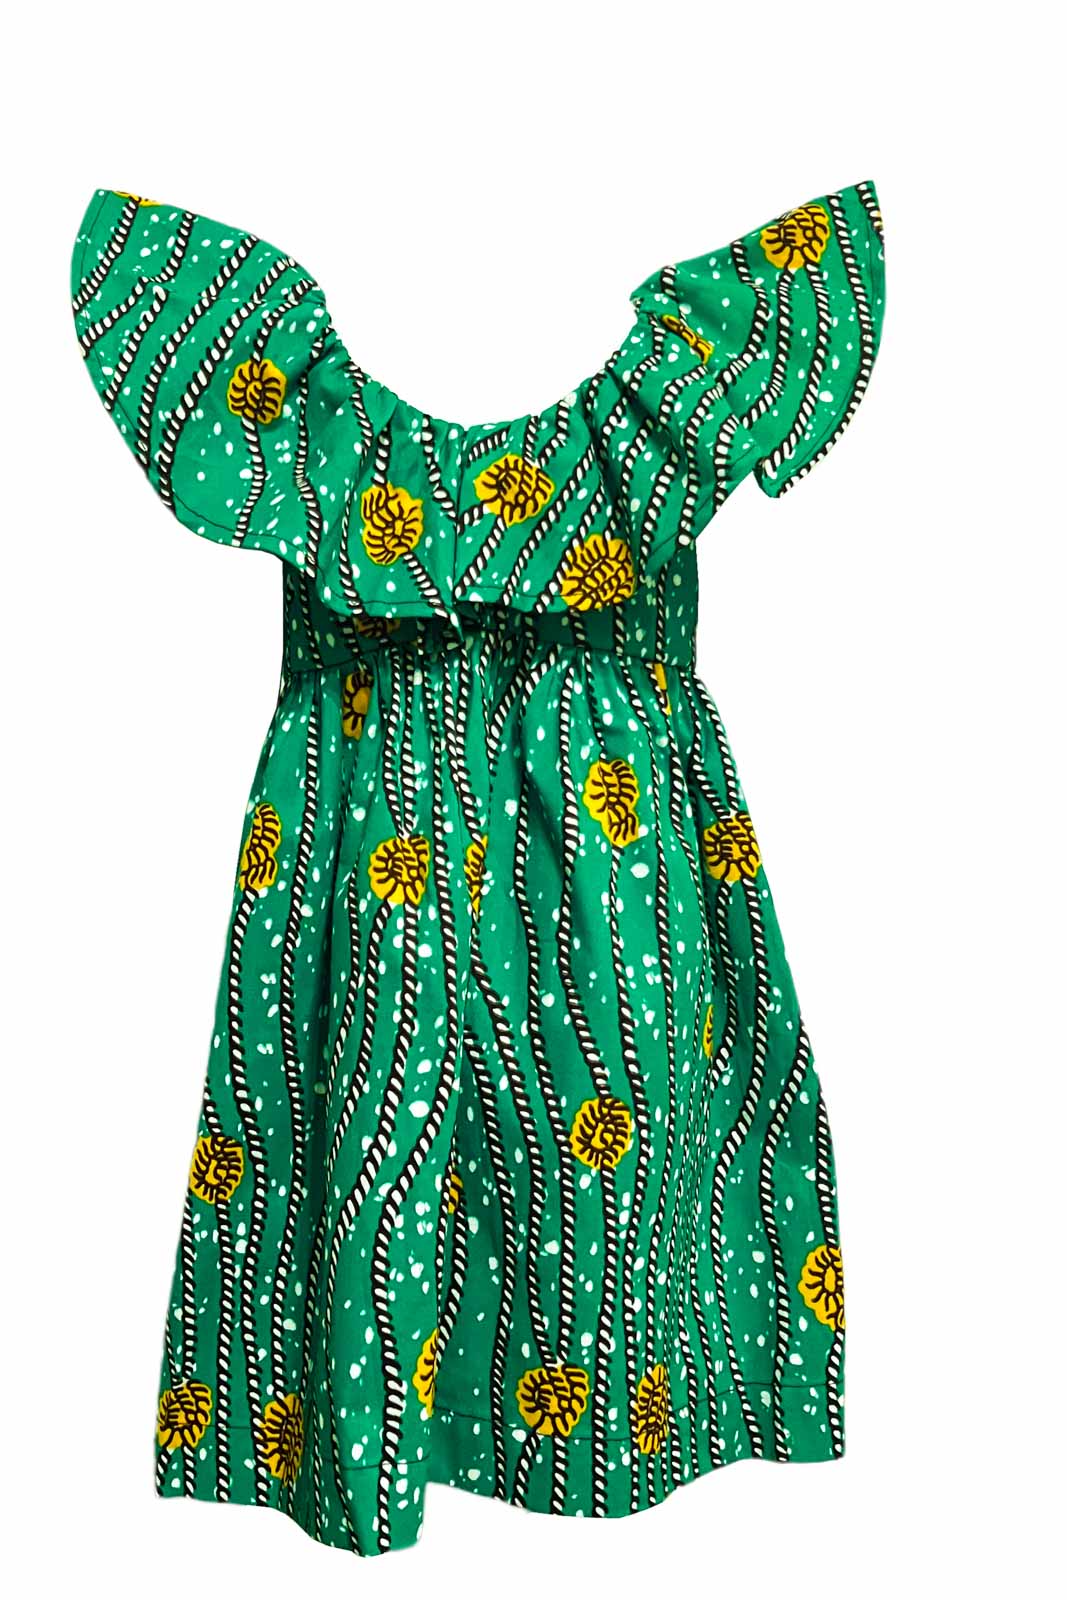 Sienna Frill Dress - Green